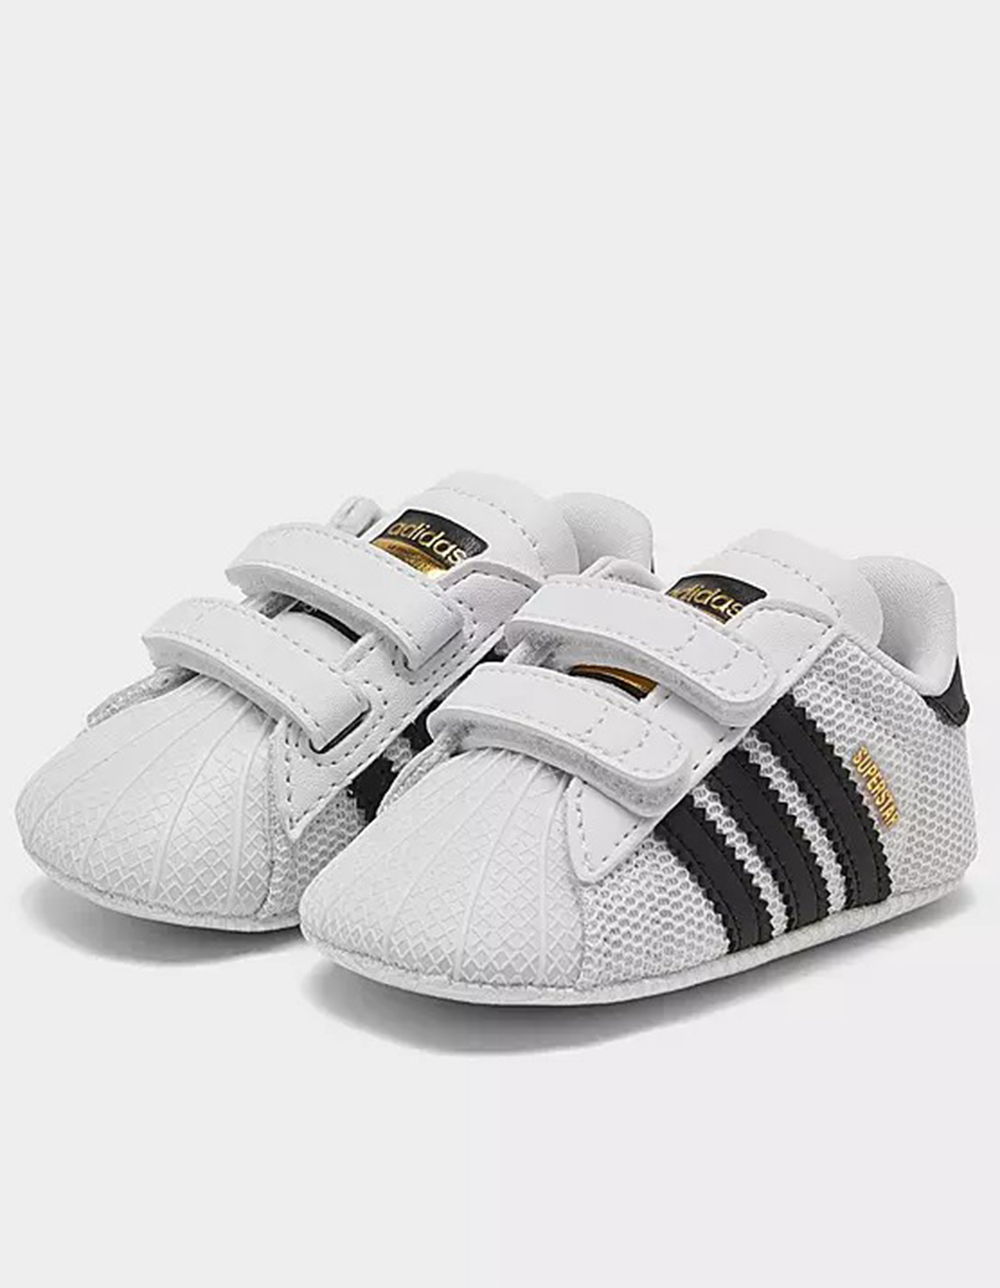 ADIDAS Superstar Crib Infant Shoes WHT/BLK Tillys